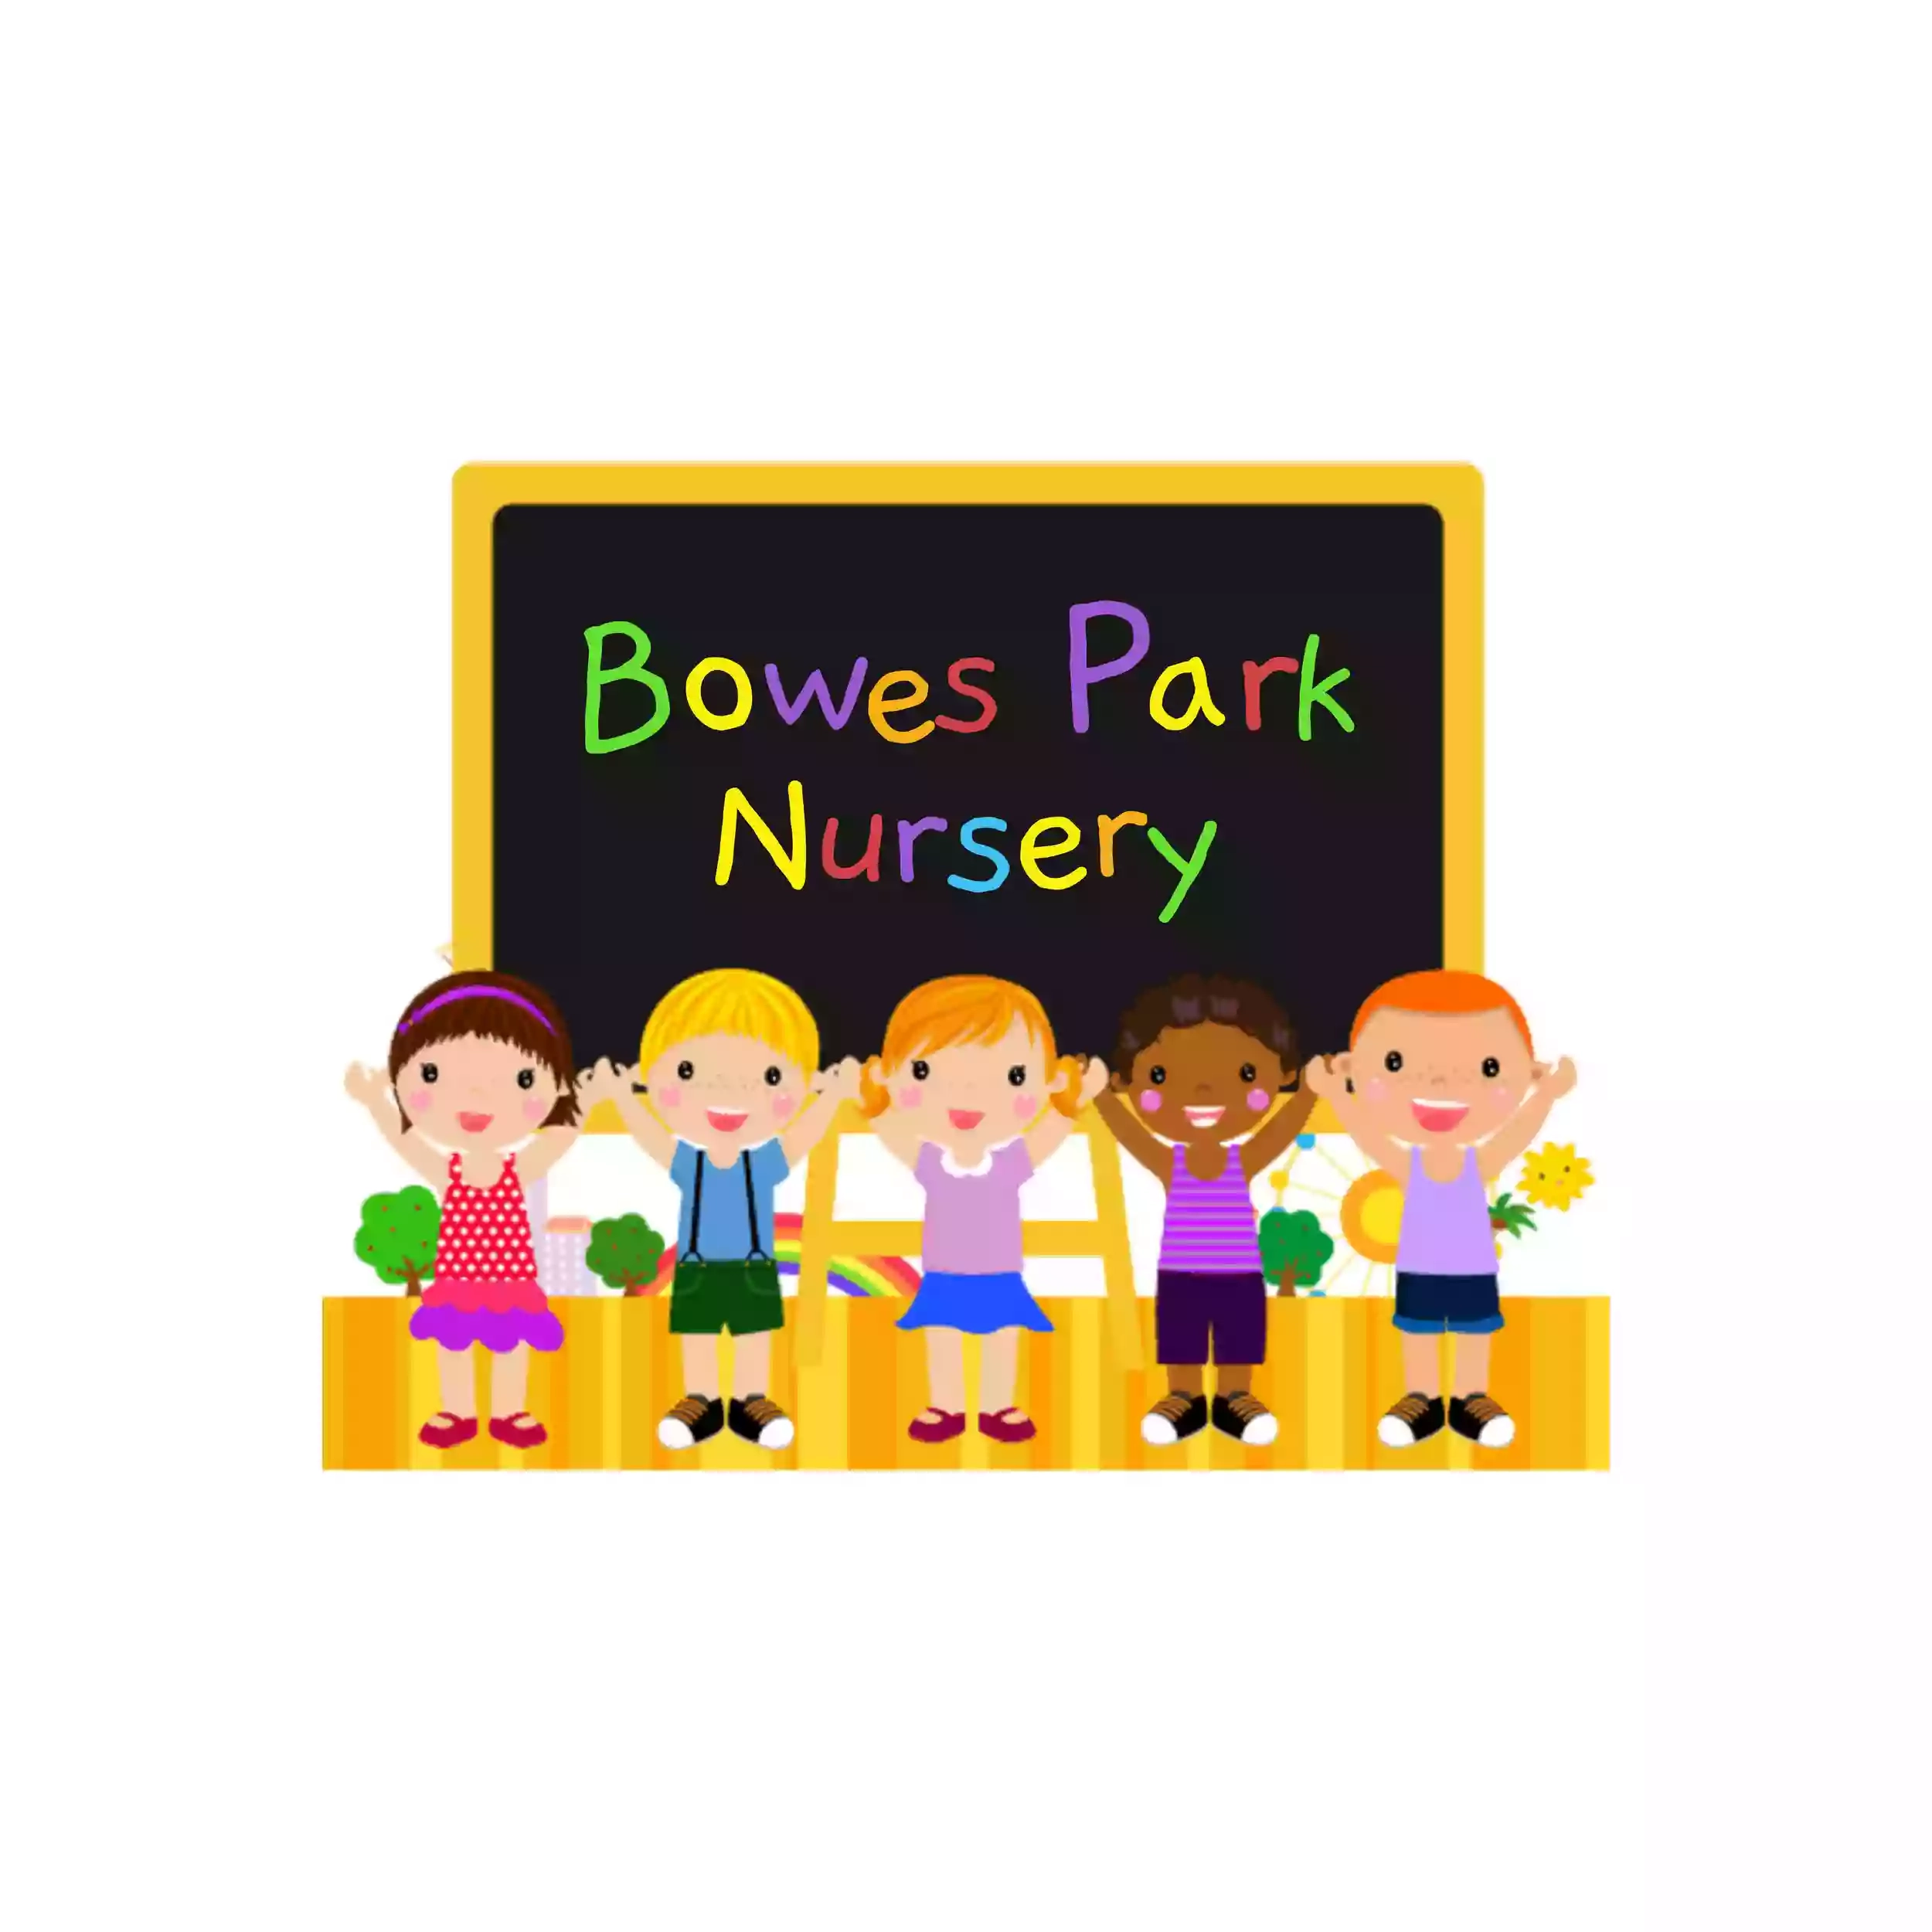 Bowes Park Nursery